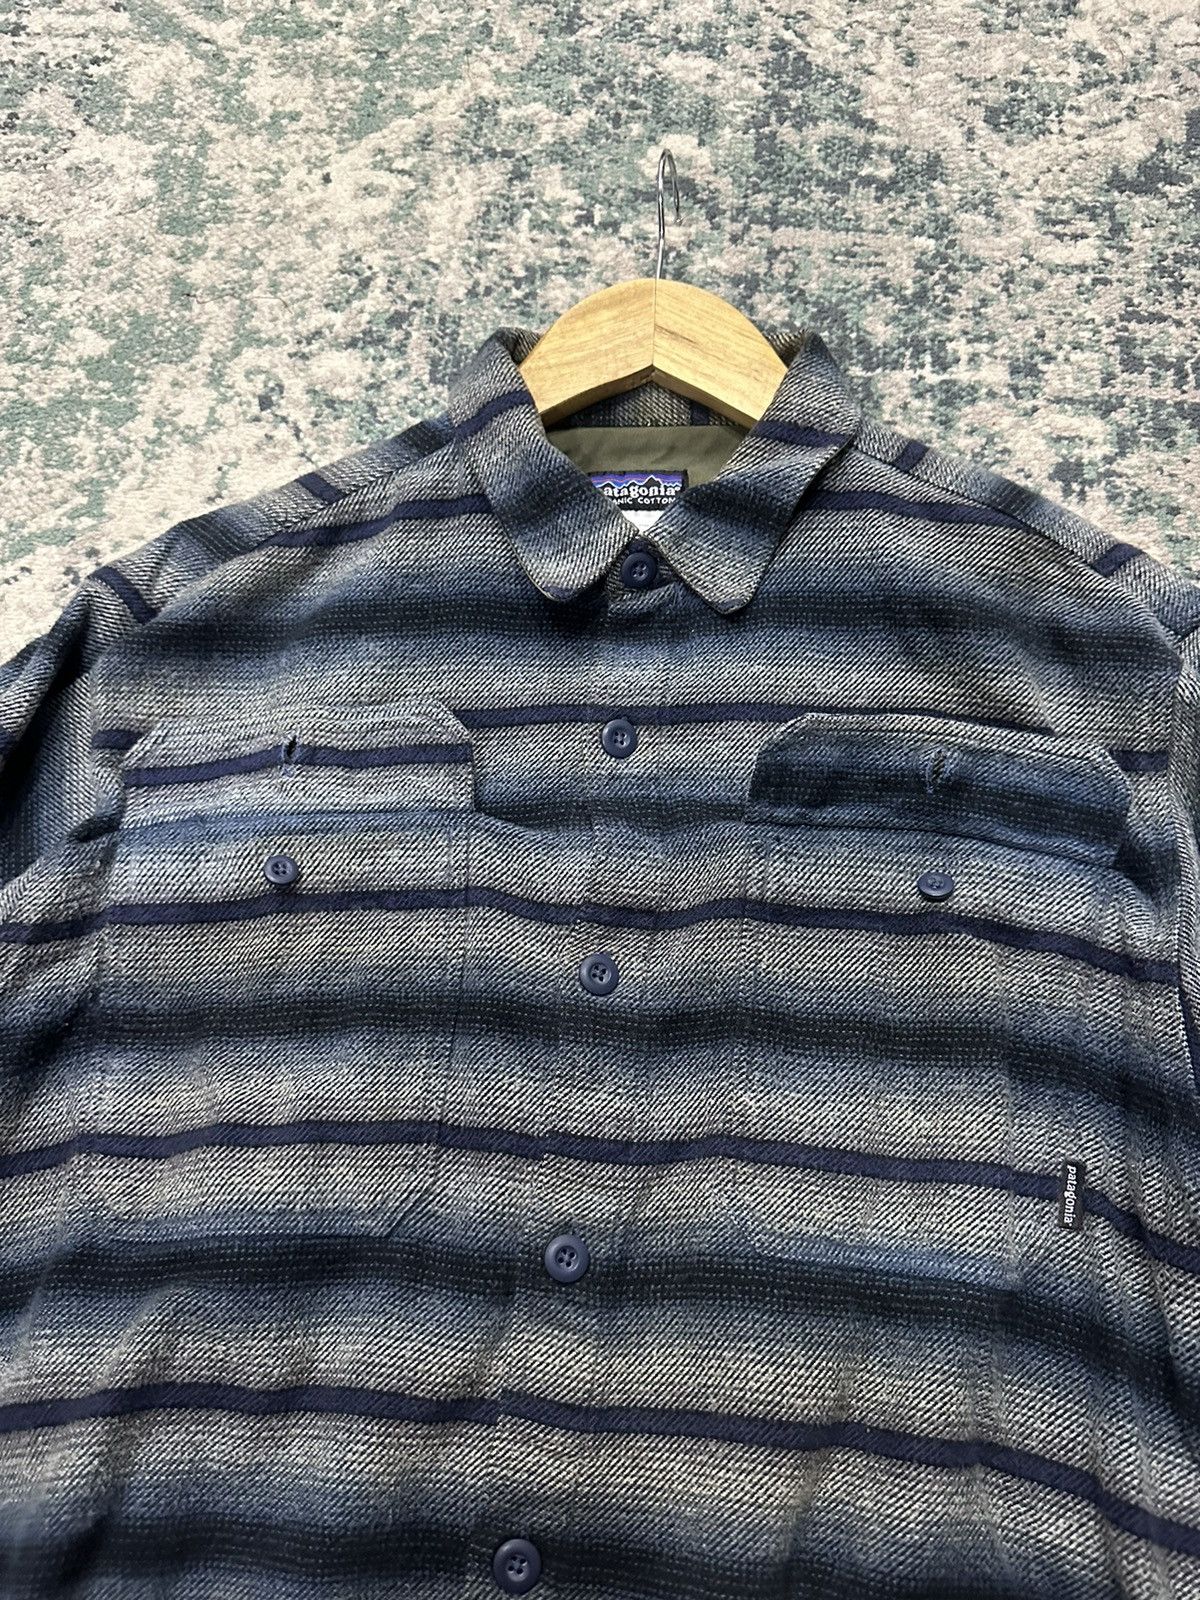 Patagonia Heavy Organic Cotton Flannel Shirt - 14